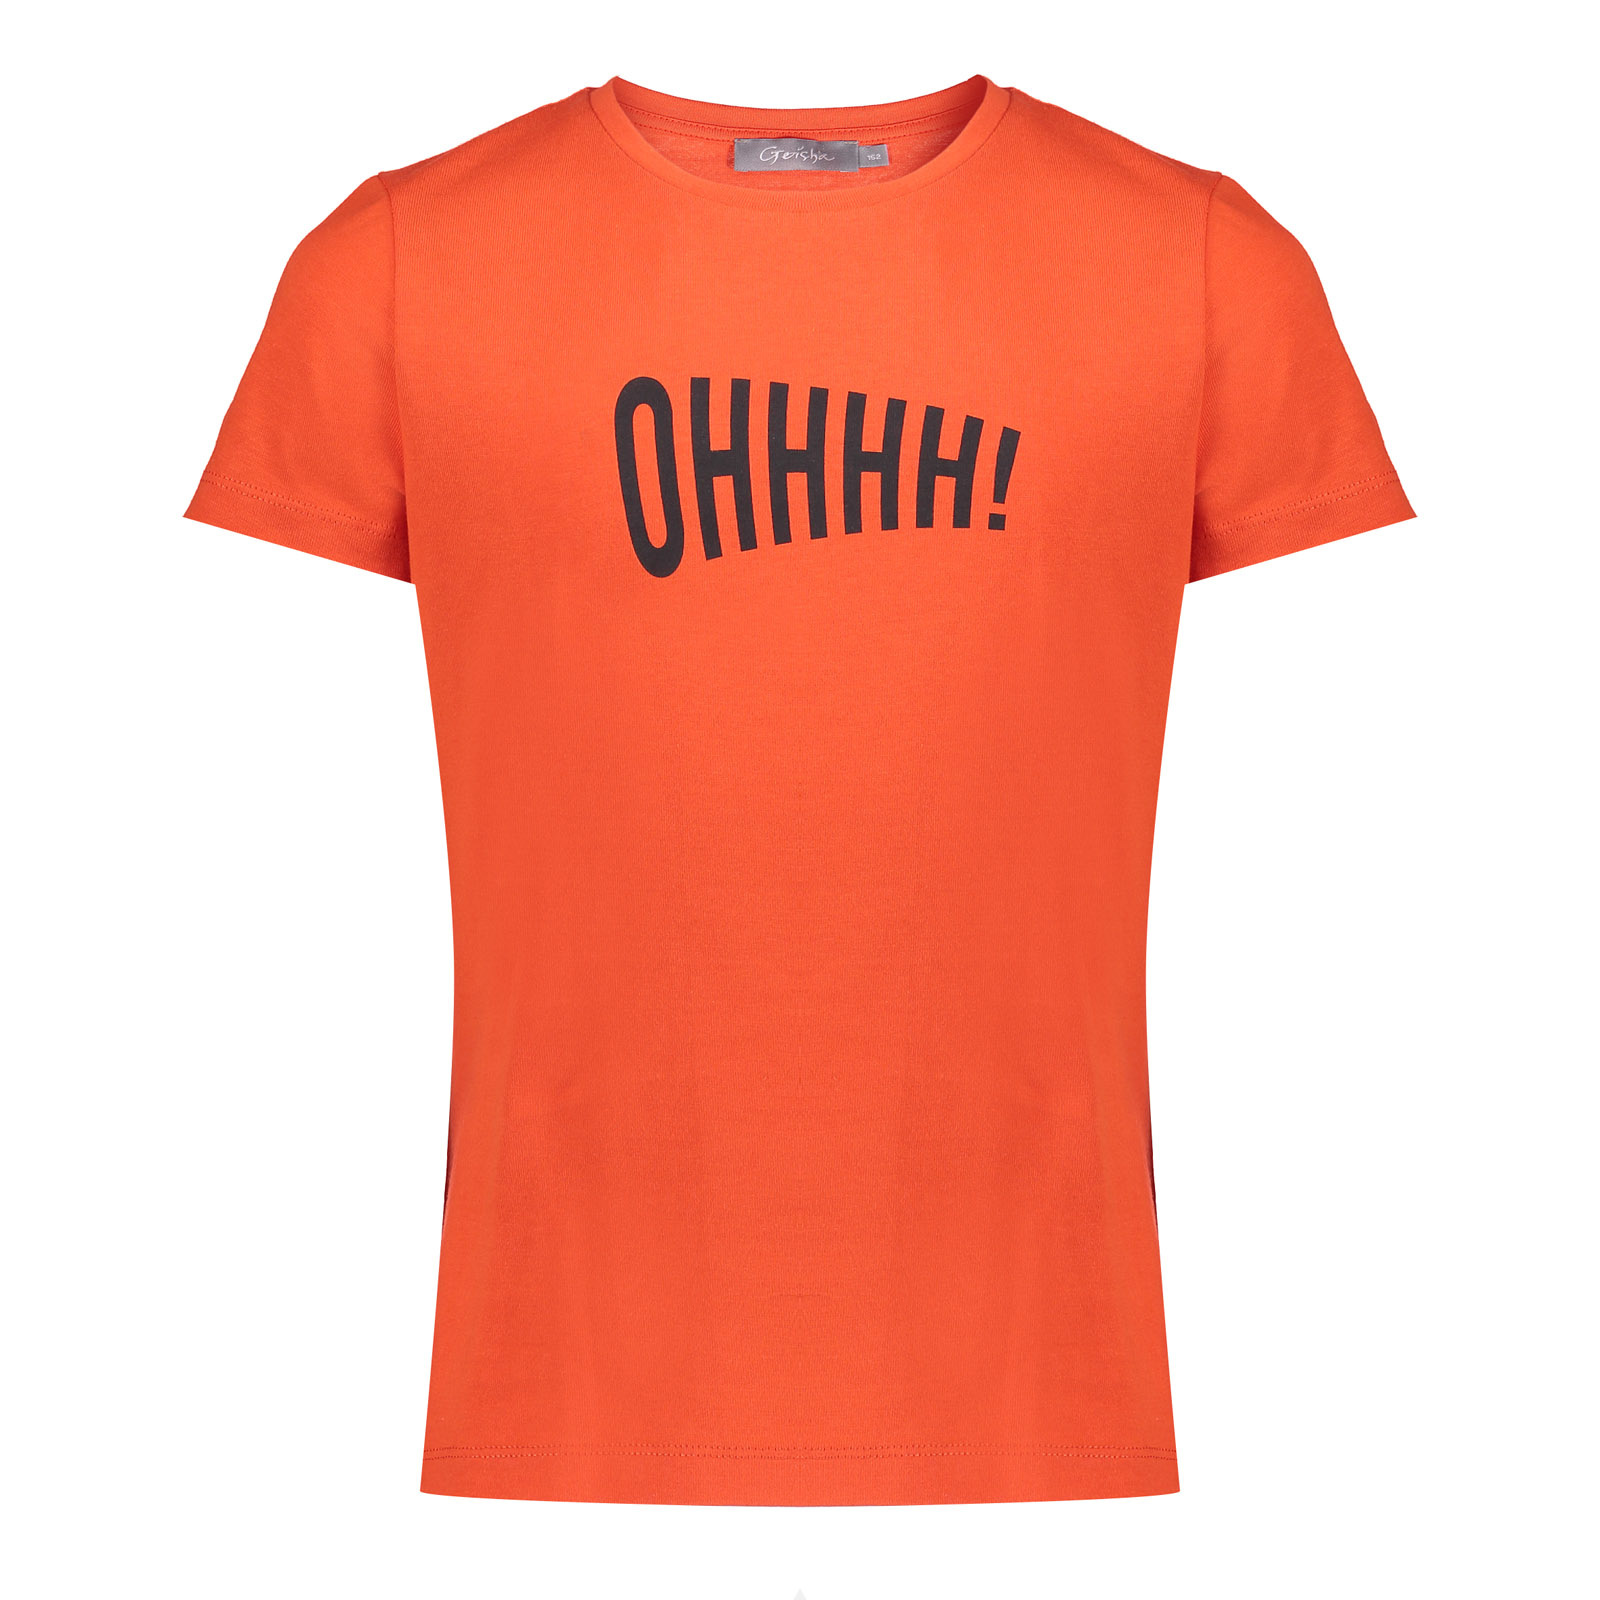 Verlichting Donker worden vragen Geisha - Meisjes t-shirt 'ohhhh!' - Koraal - merkmeisjeskleding.nl